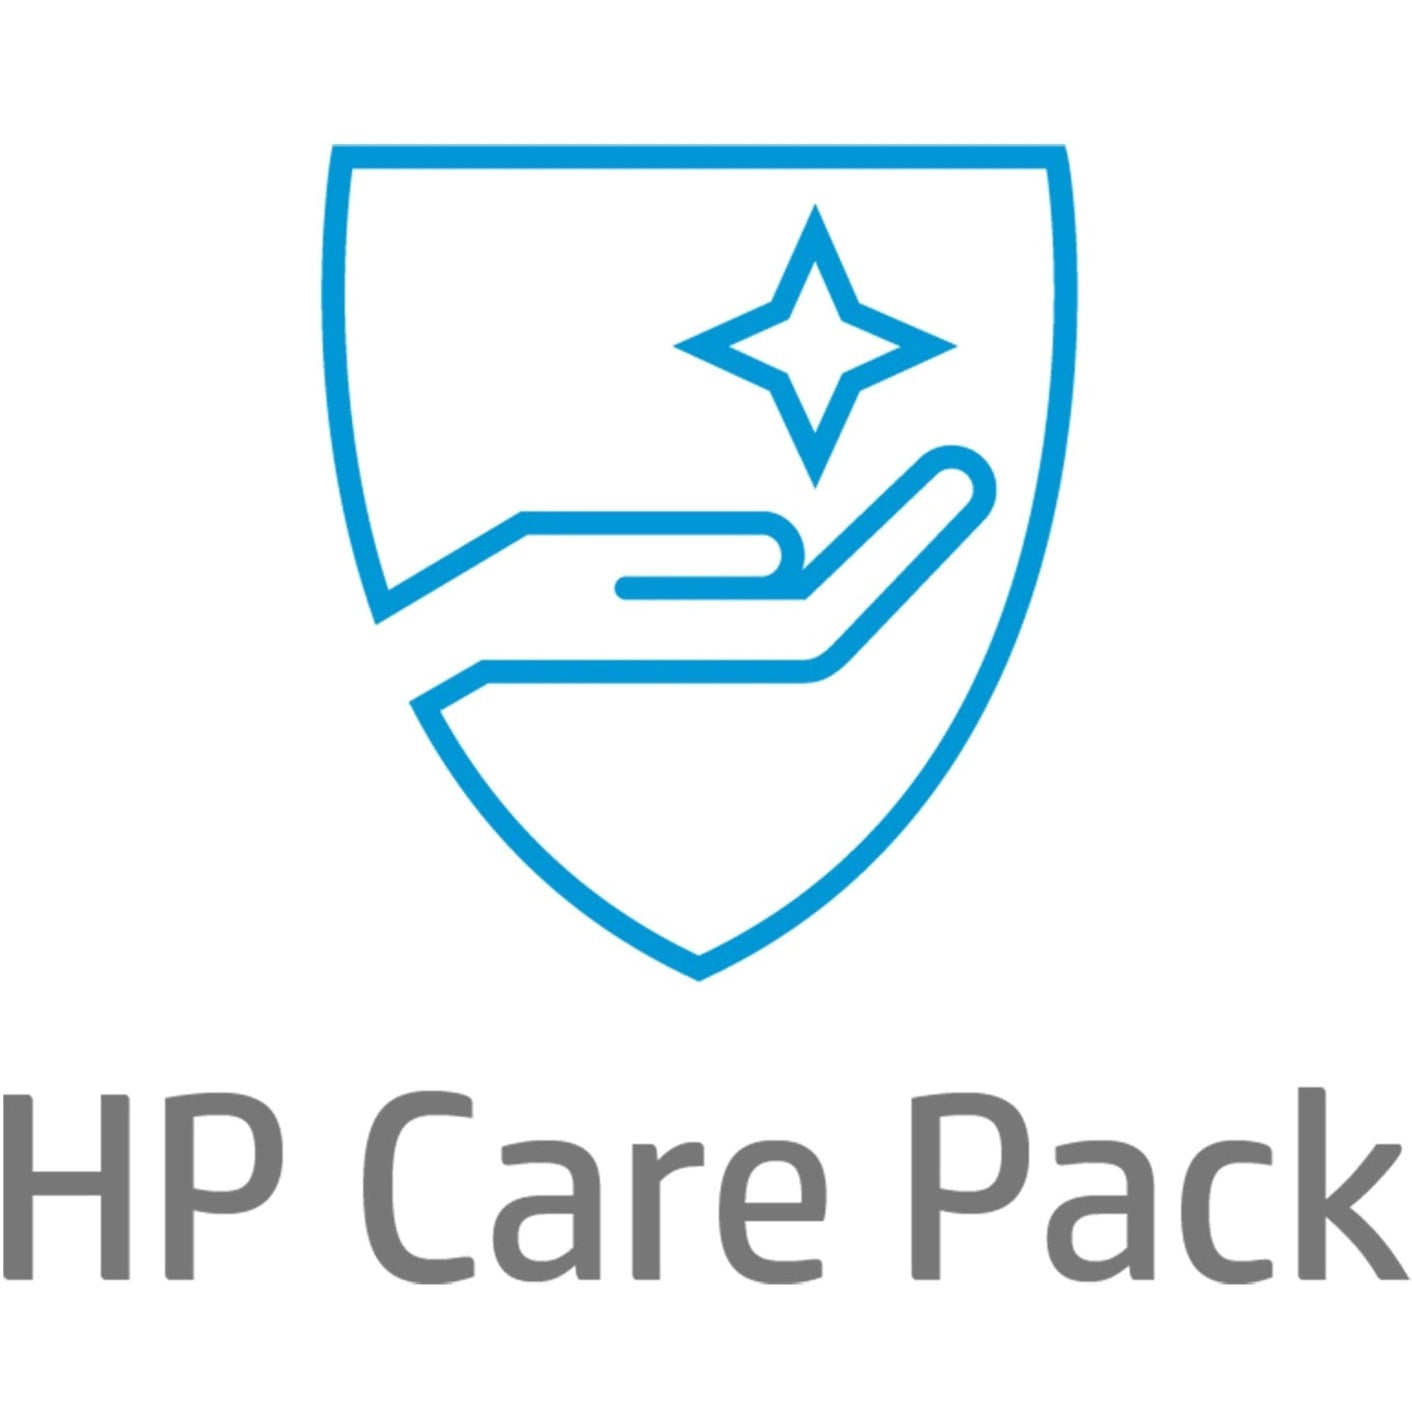 HP Care Pack - 4 Year - Warranty (UA6Z2E)